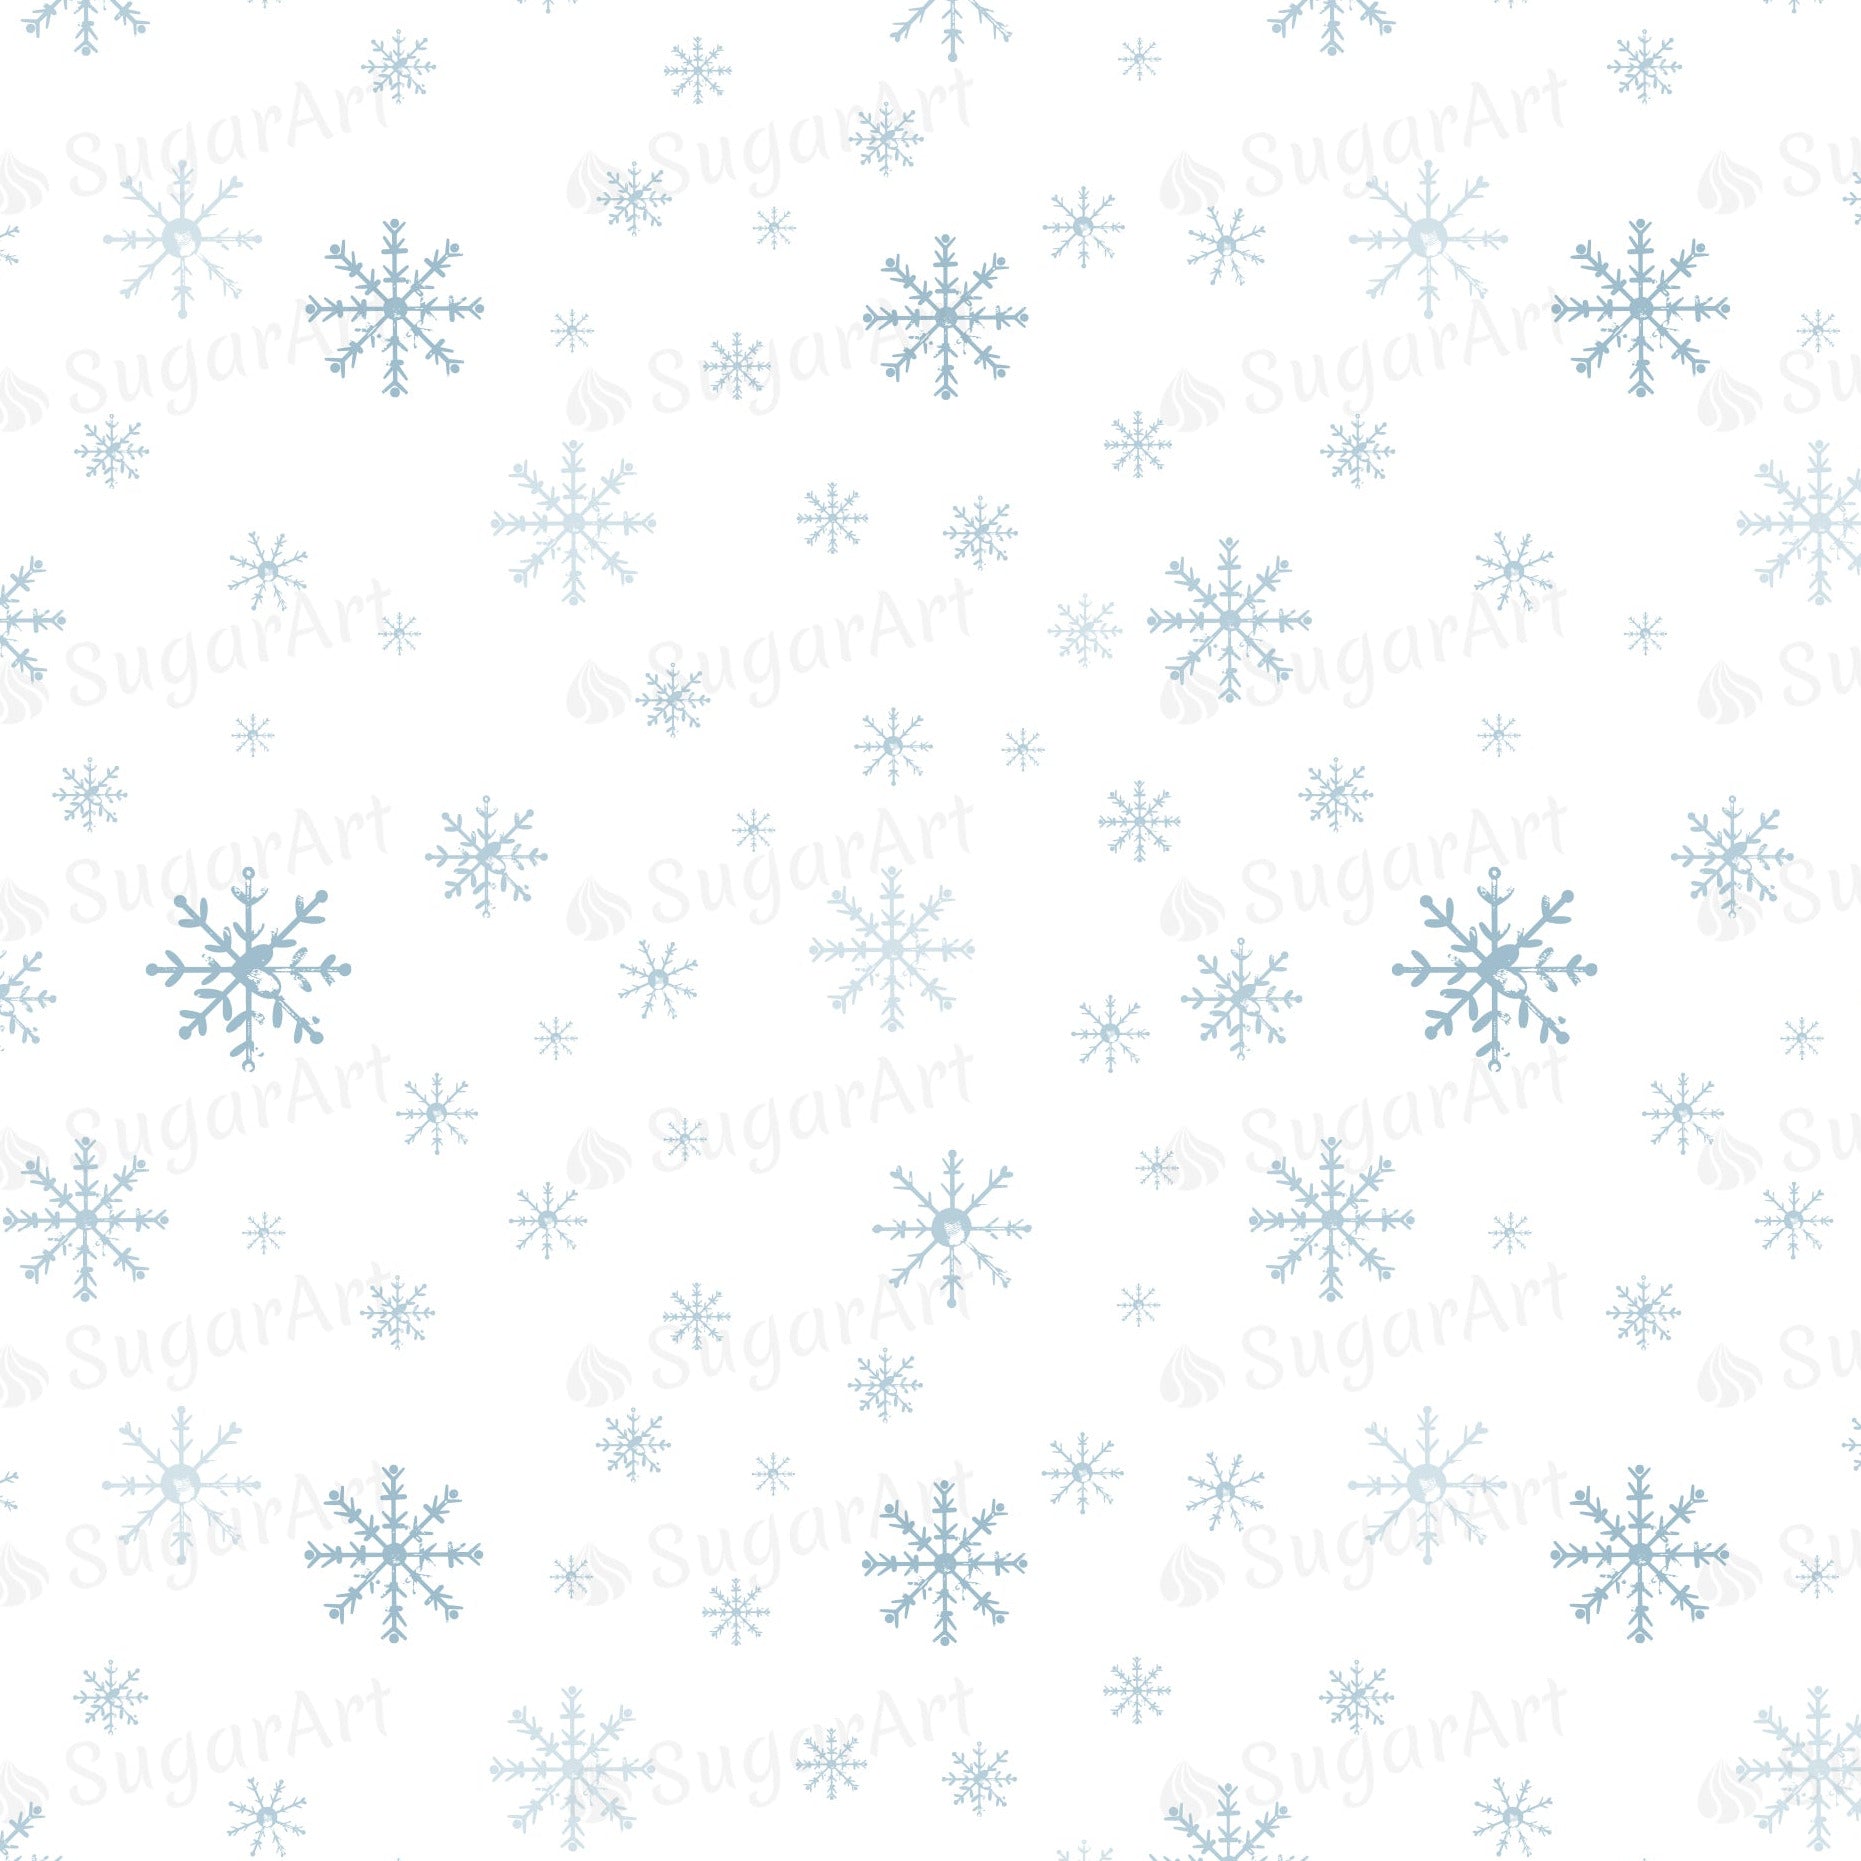 ESA222-snowflakes-snow-crystal-background